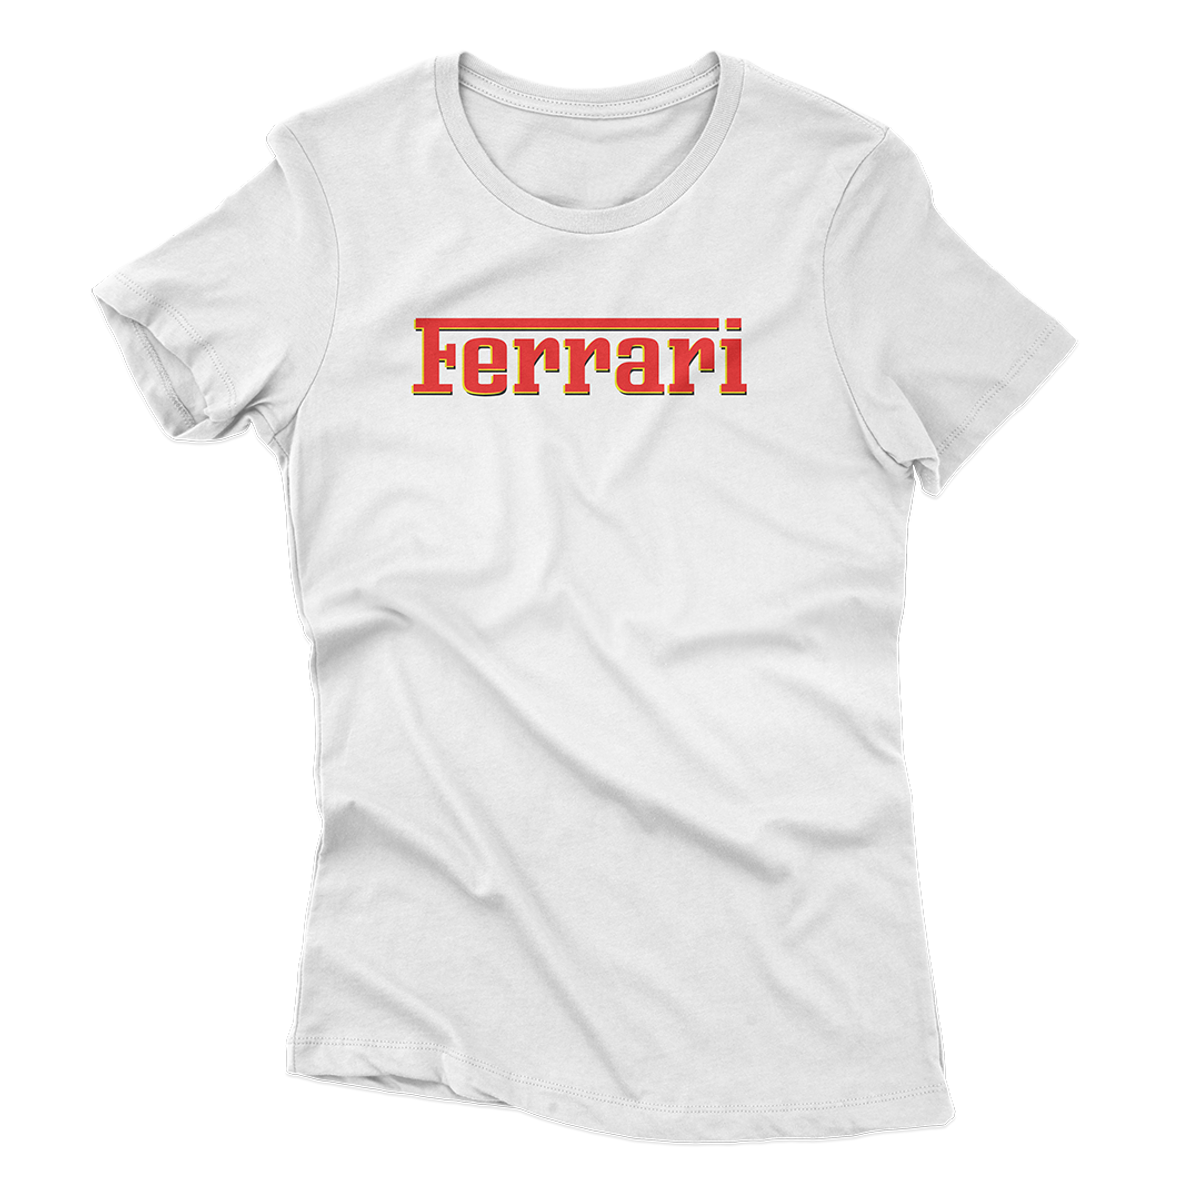 Nome do produto: Camiseta Feminina Ferrari - Branca